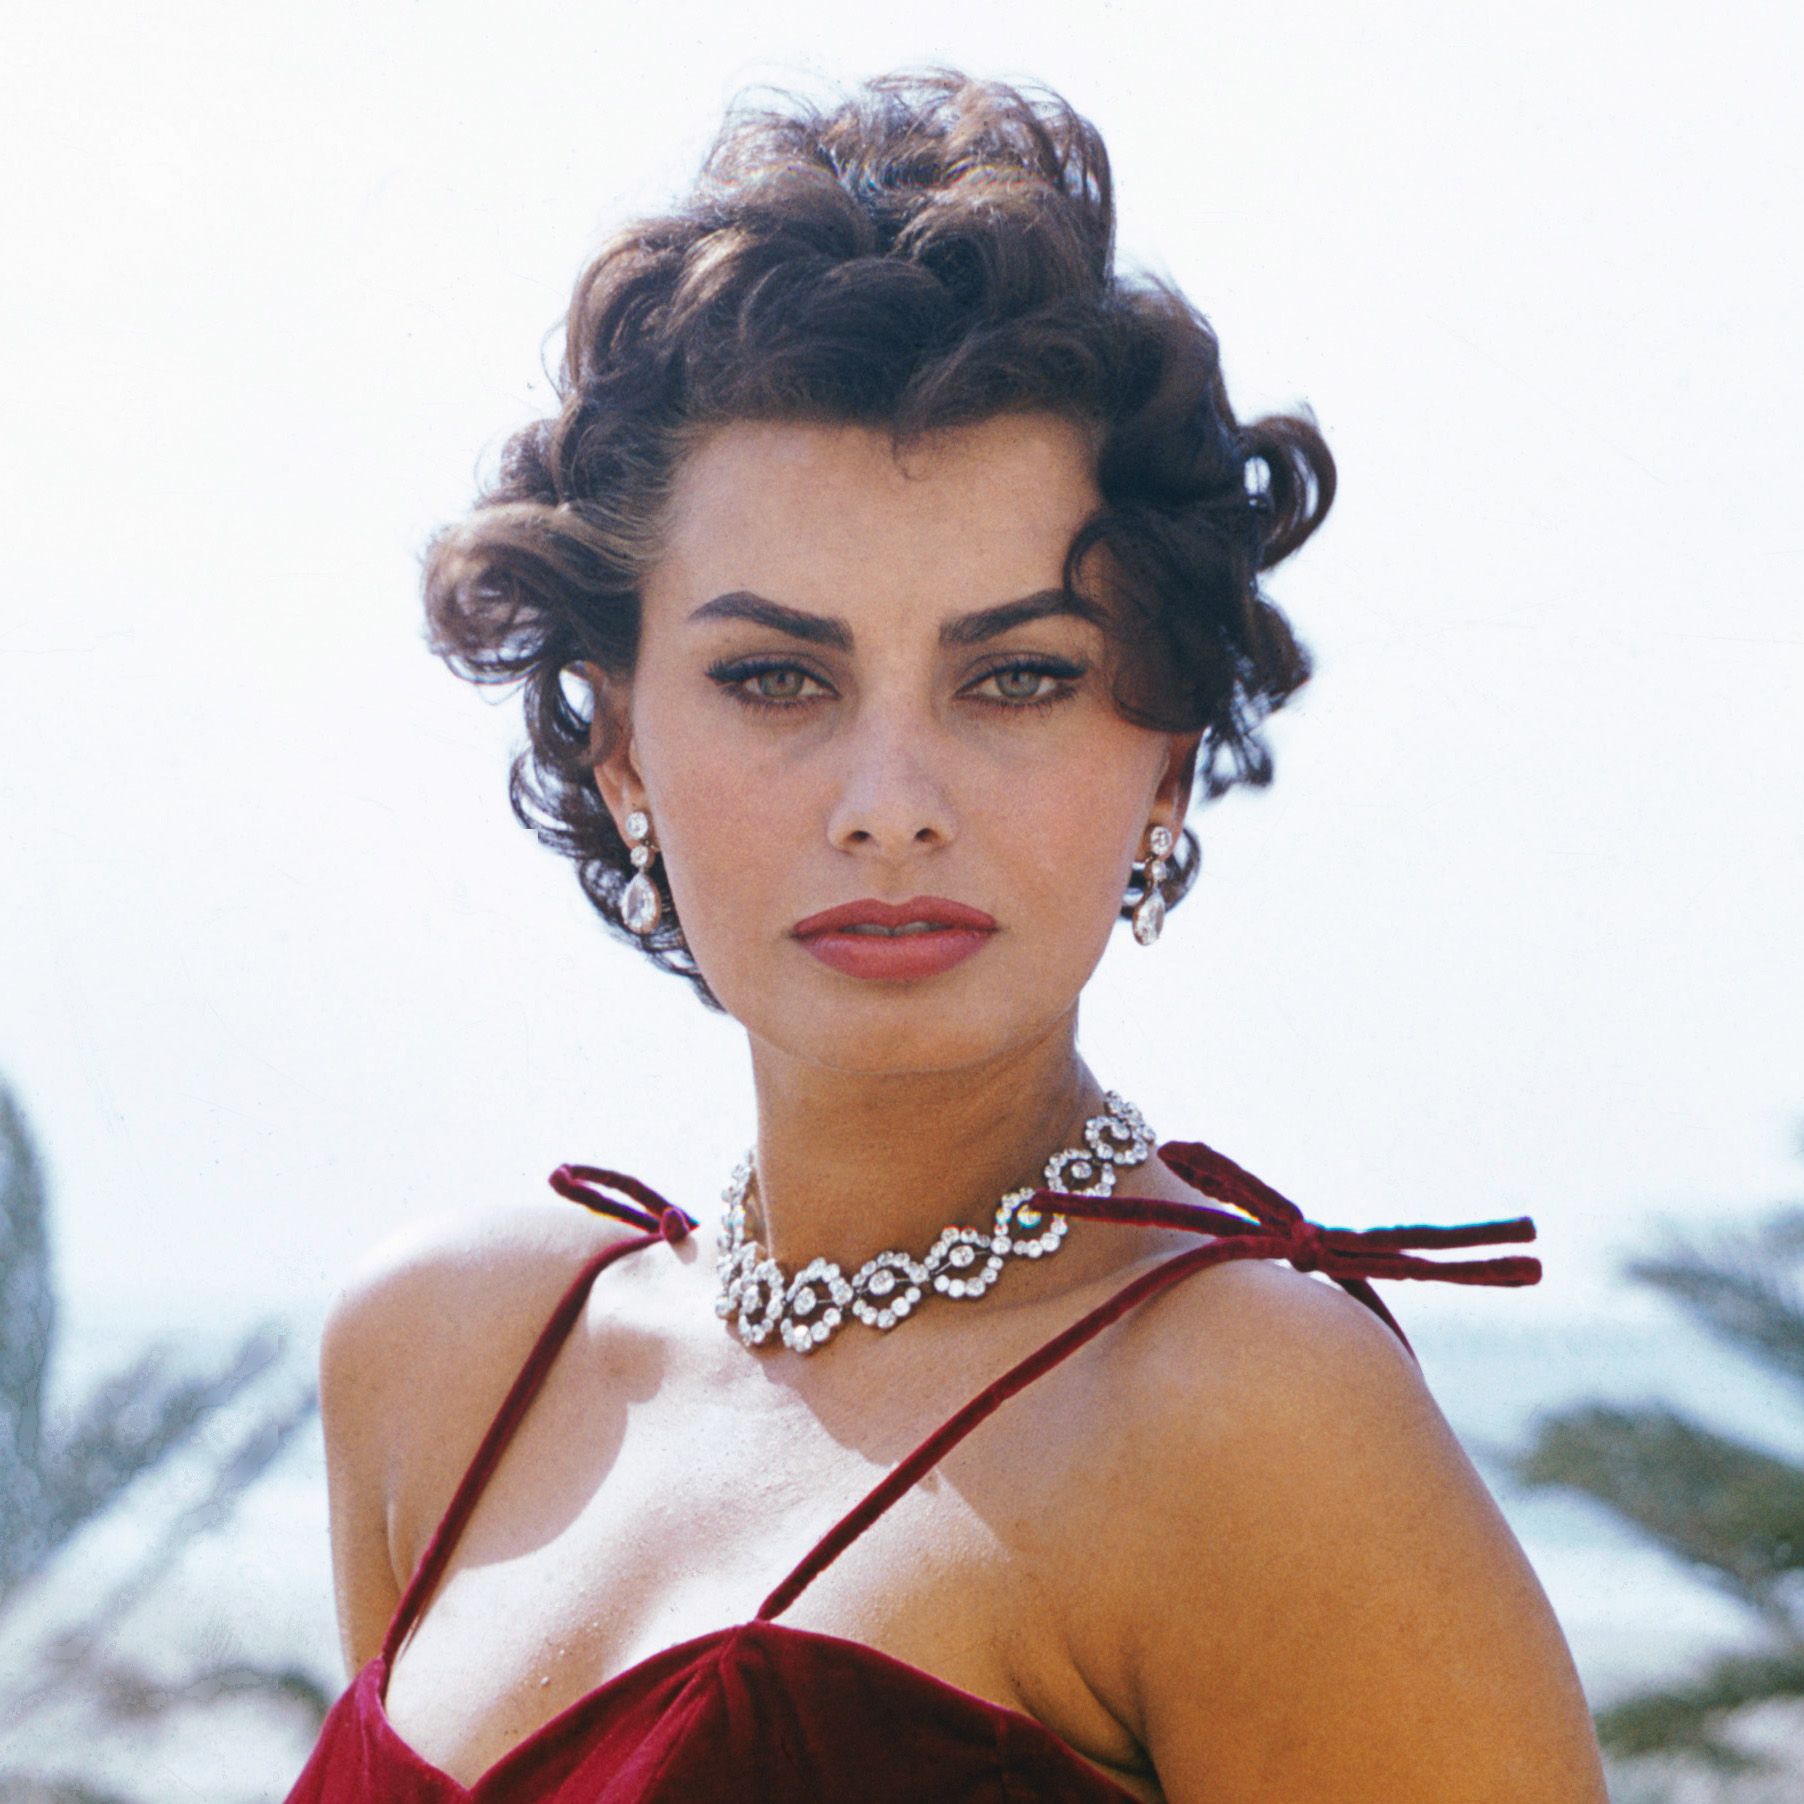 Sofia Lione Xnxx - Sophia Loren - Movies, Age & Children